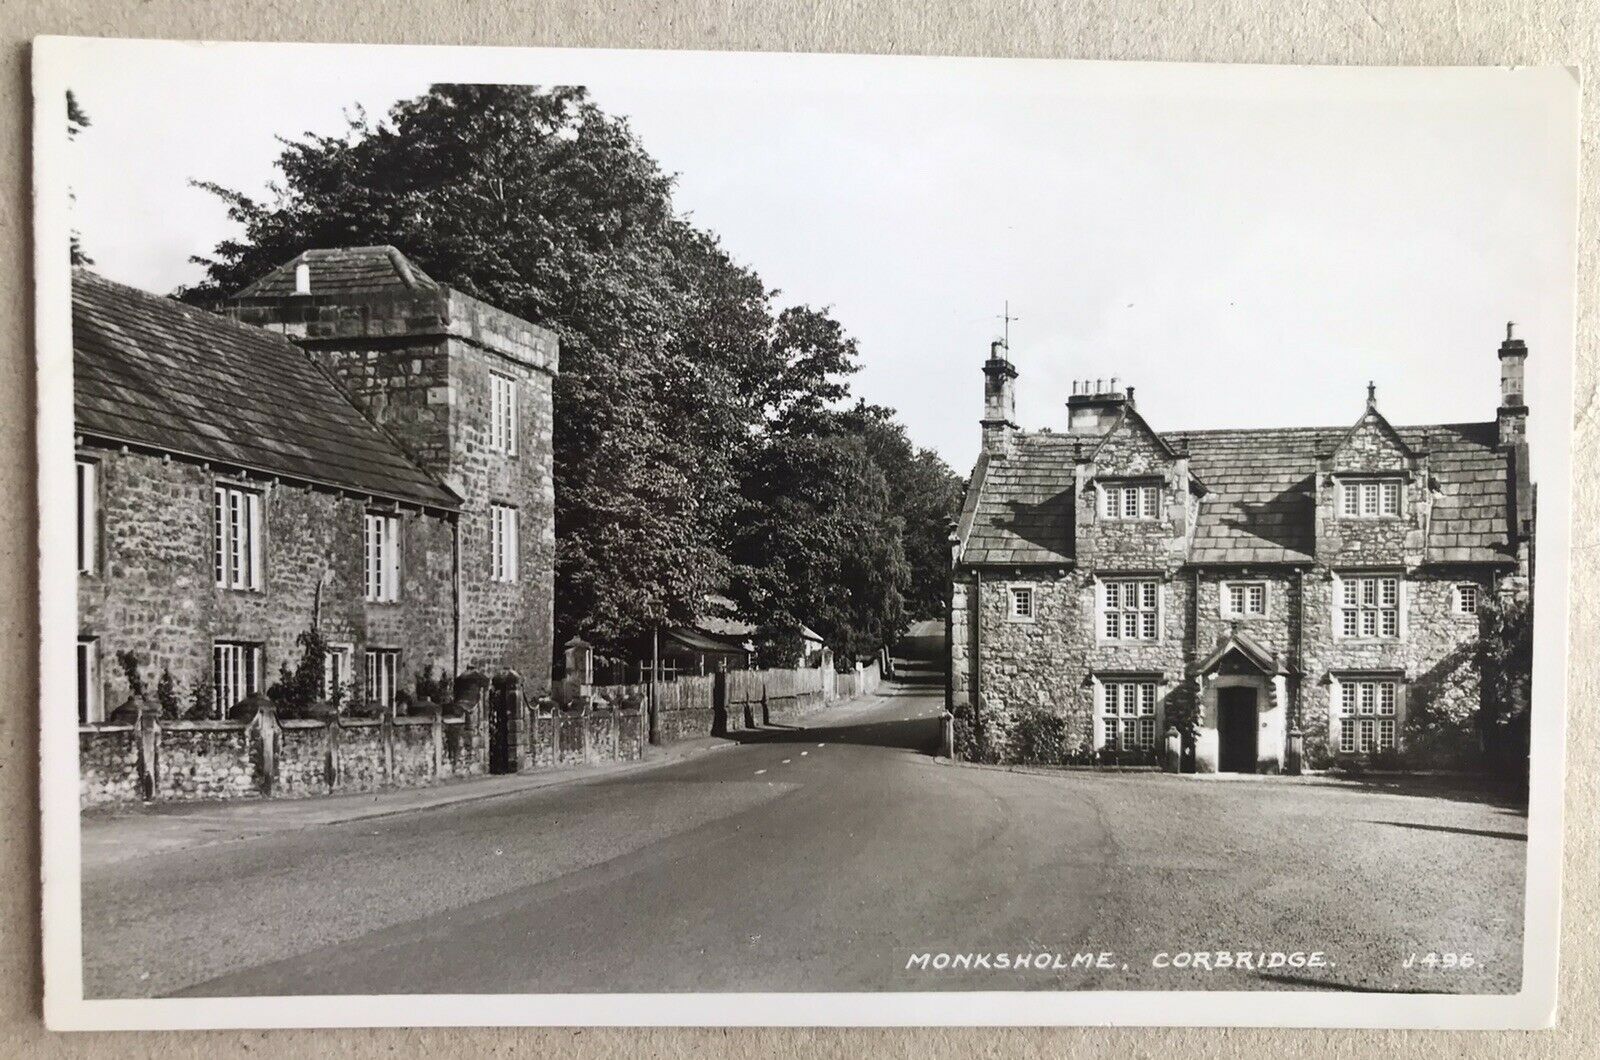 House Clearance - Corbridge - Monksholme - Northumberland - A Vintage RP Service